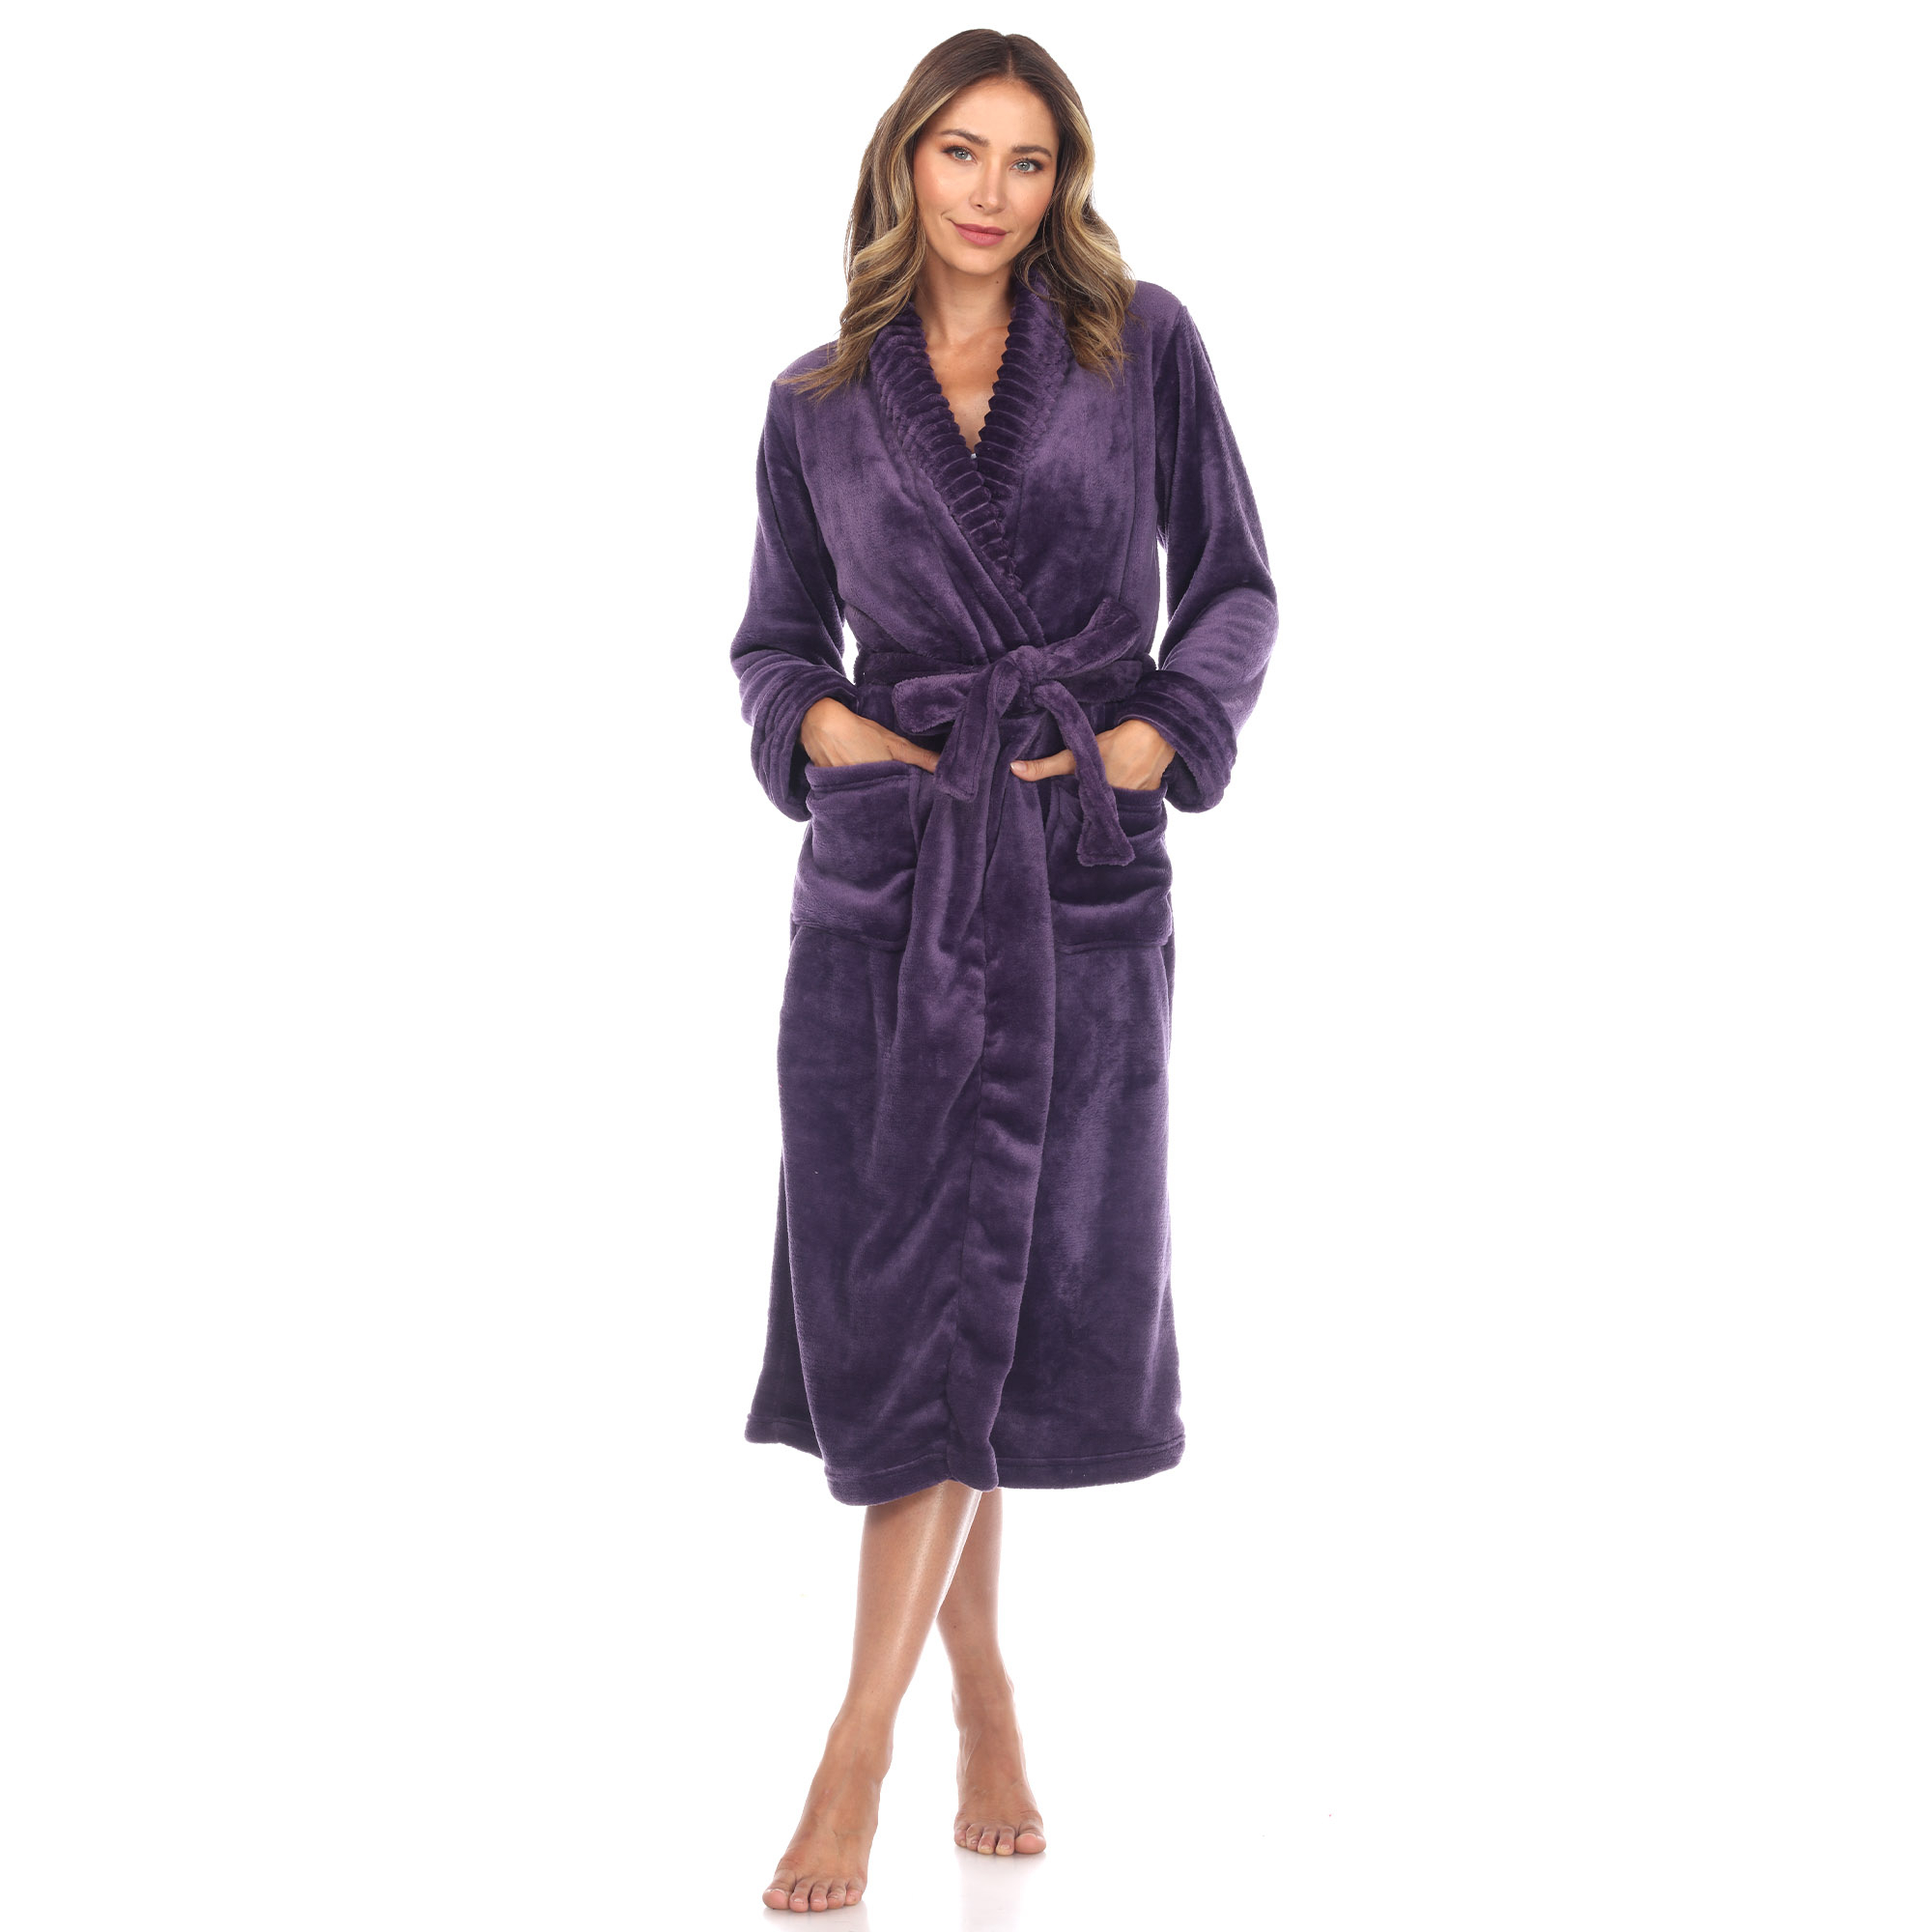 White Mark Women's Cozy Lounge Robe - Purple, 2X/3X